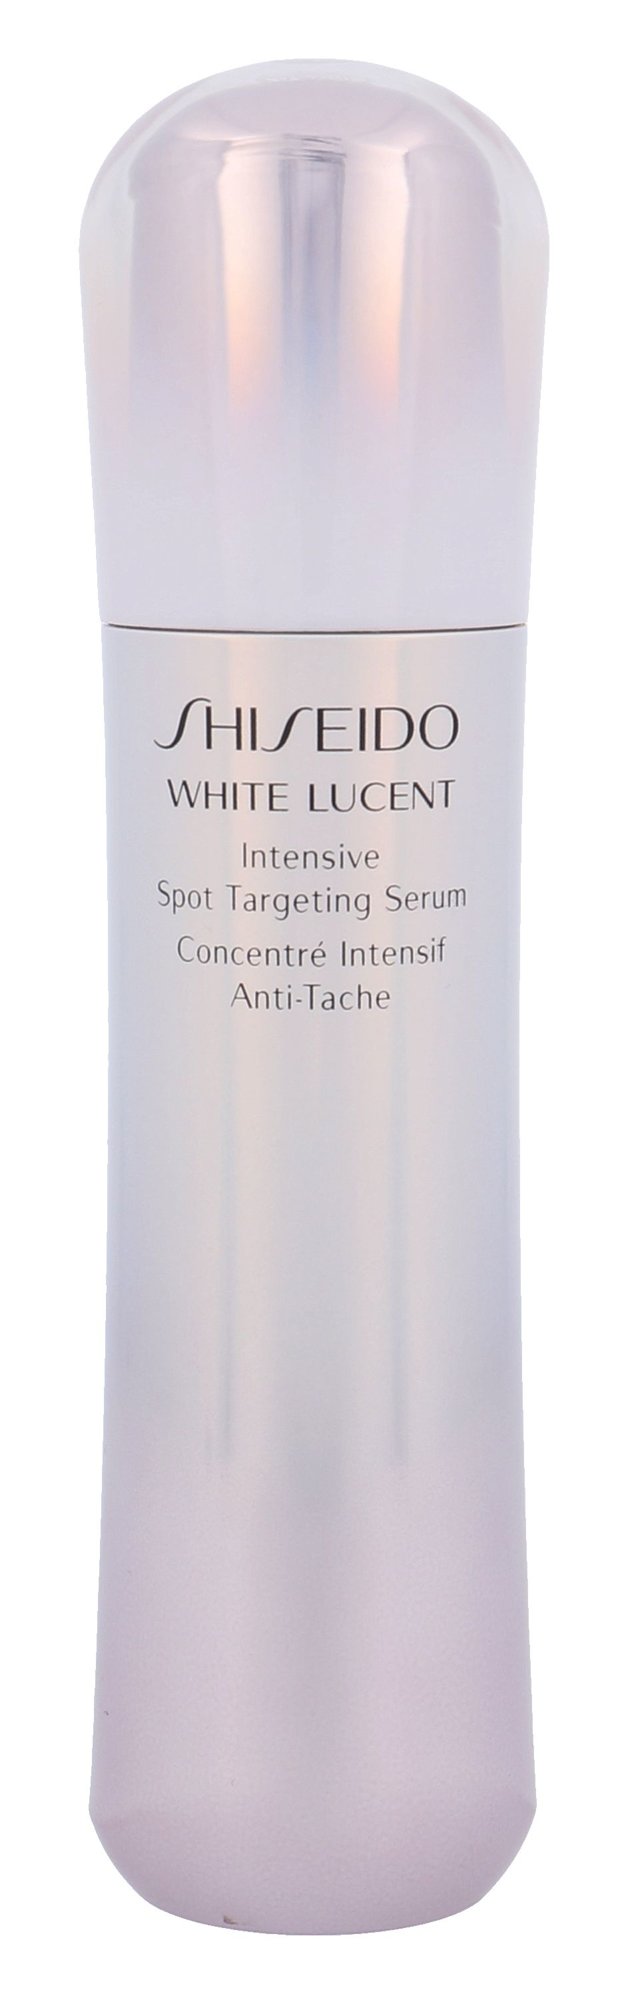 Shiseido White Lucent 50ml Veido serumas Testeris